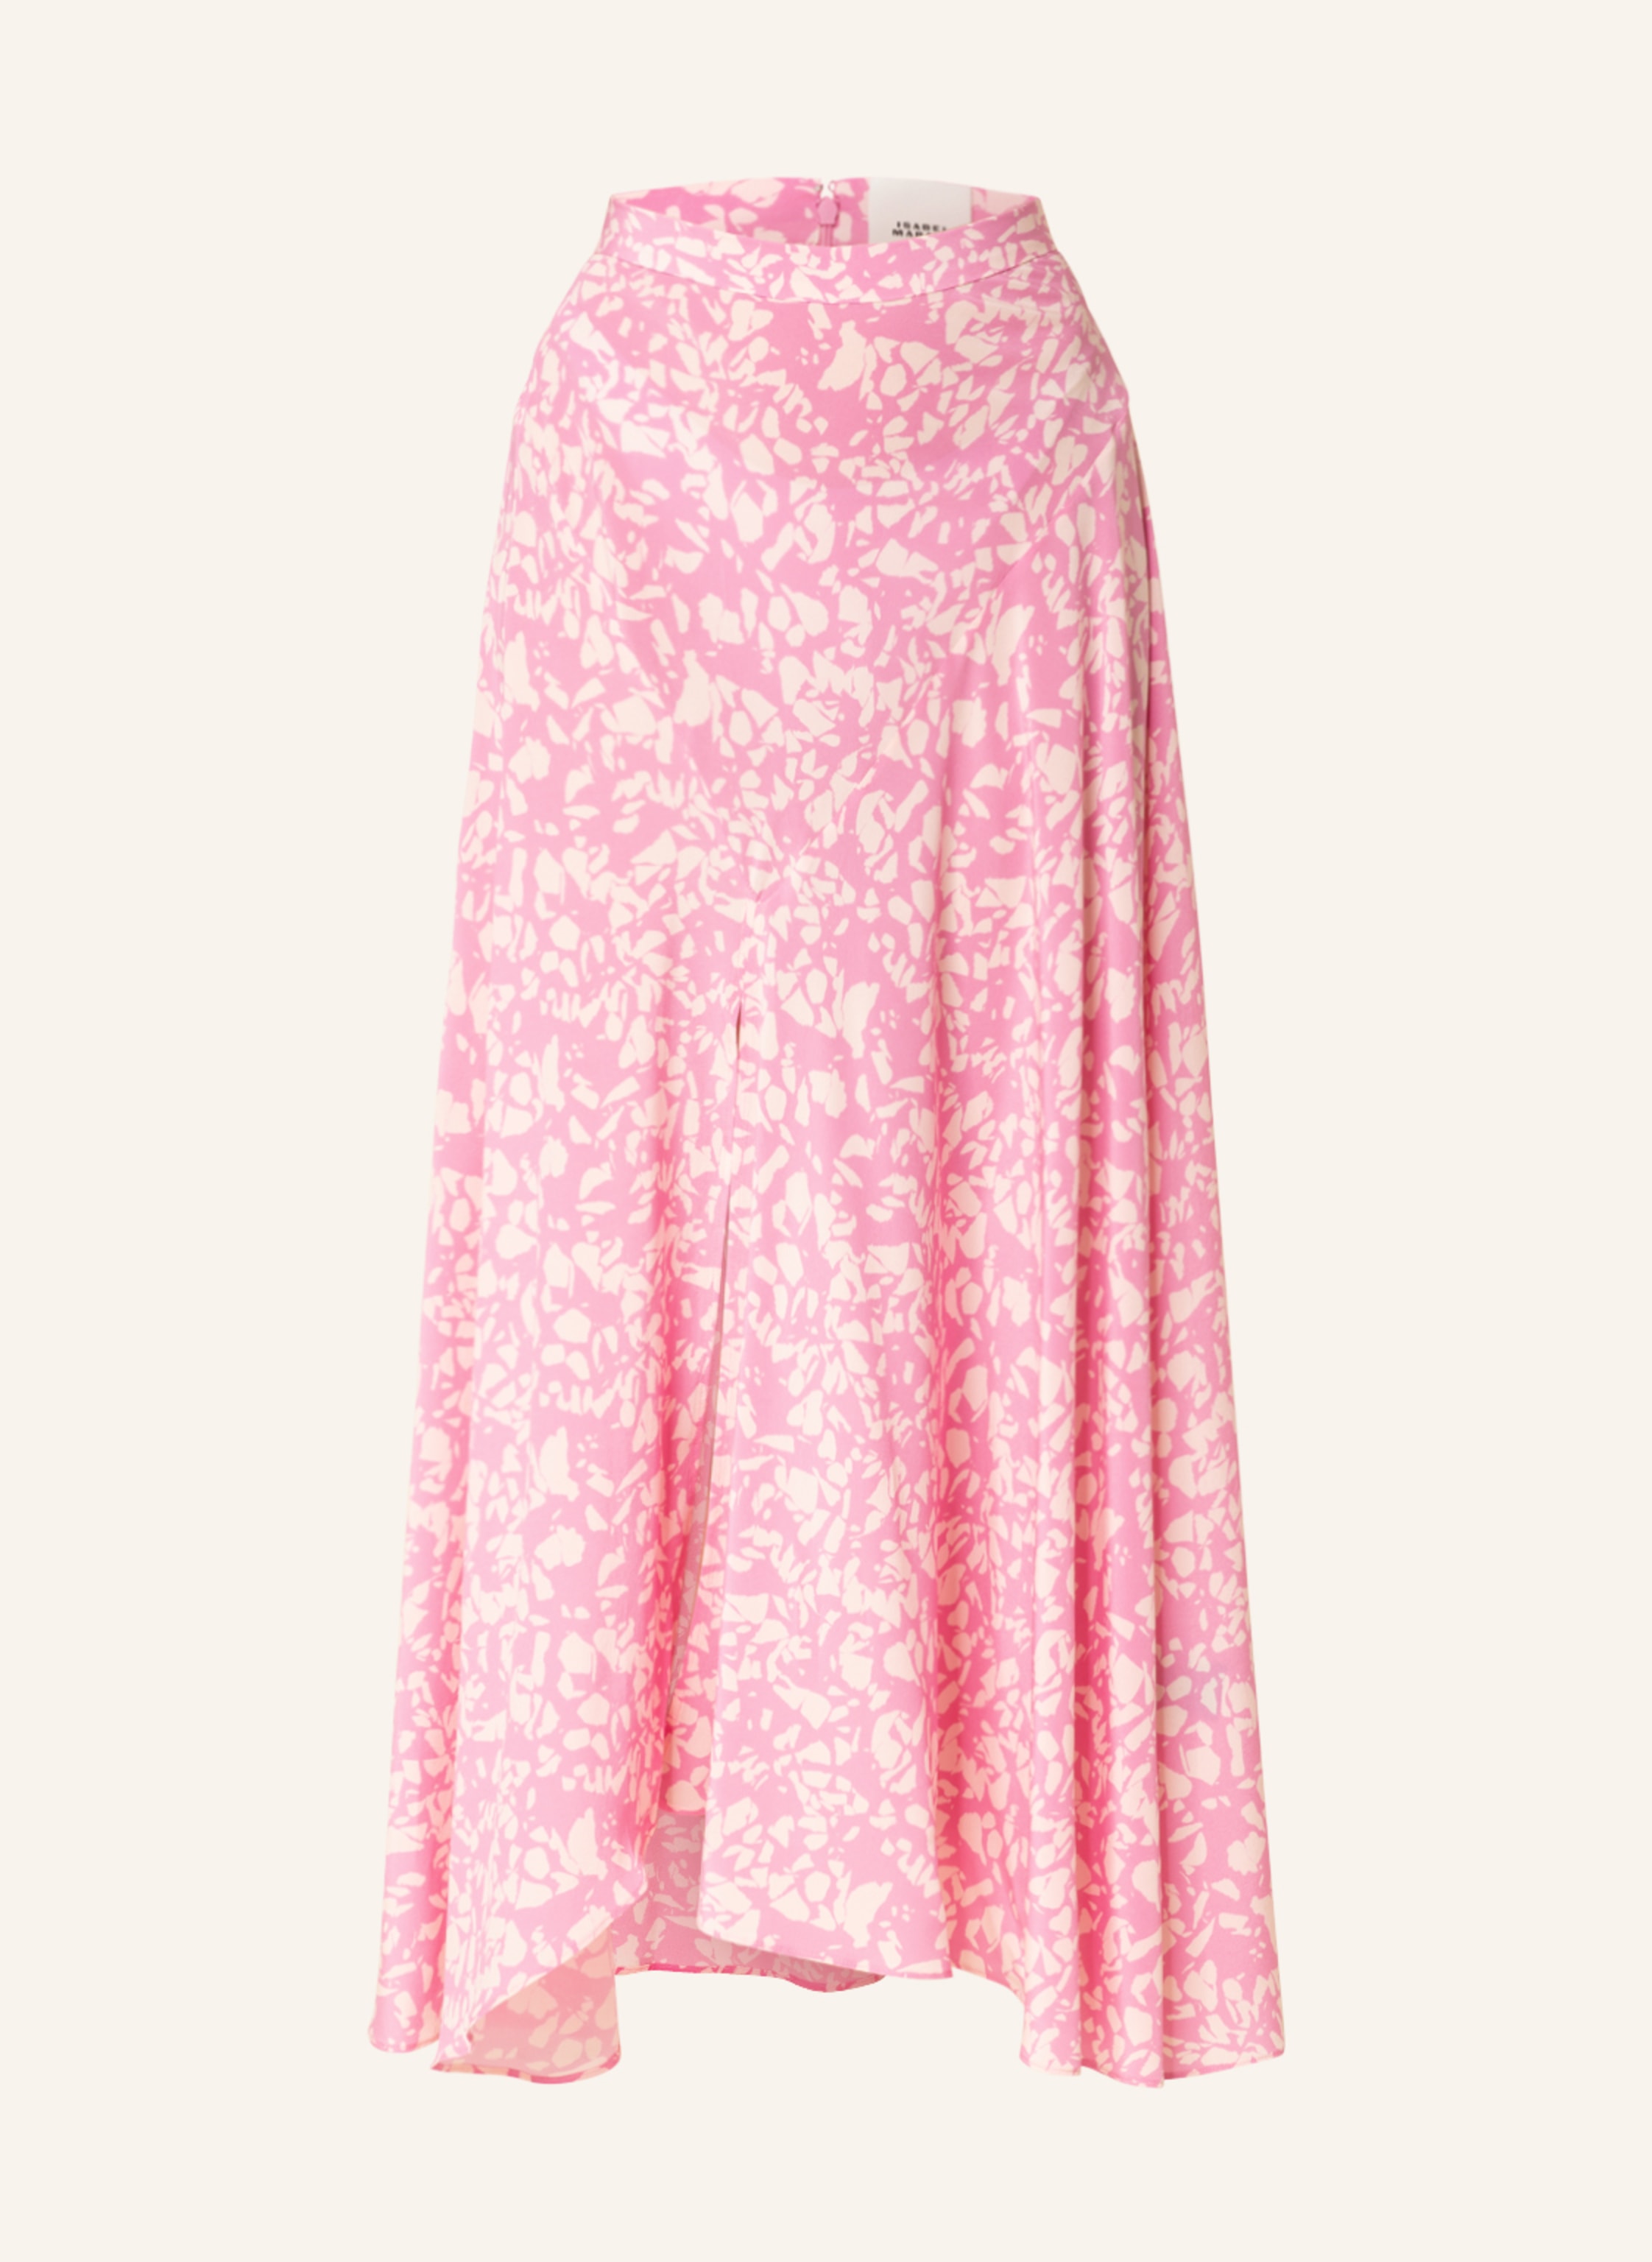 elektrode Desperat ingen forbindelse ISABEL MARANT Silk skirt SAKURA in pink/ light pink | Breuninger